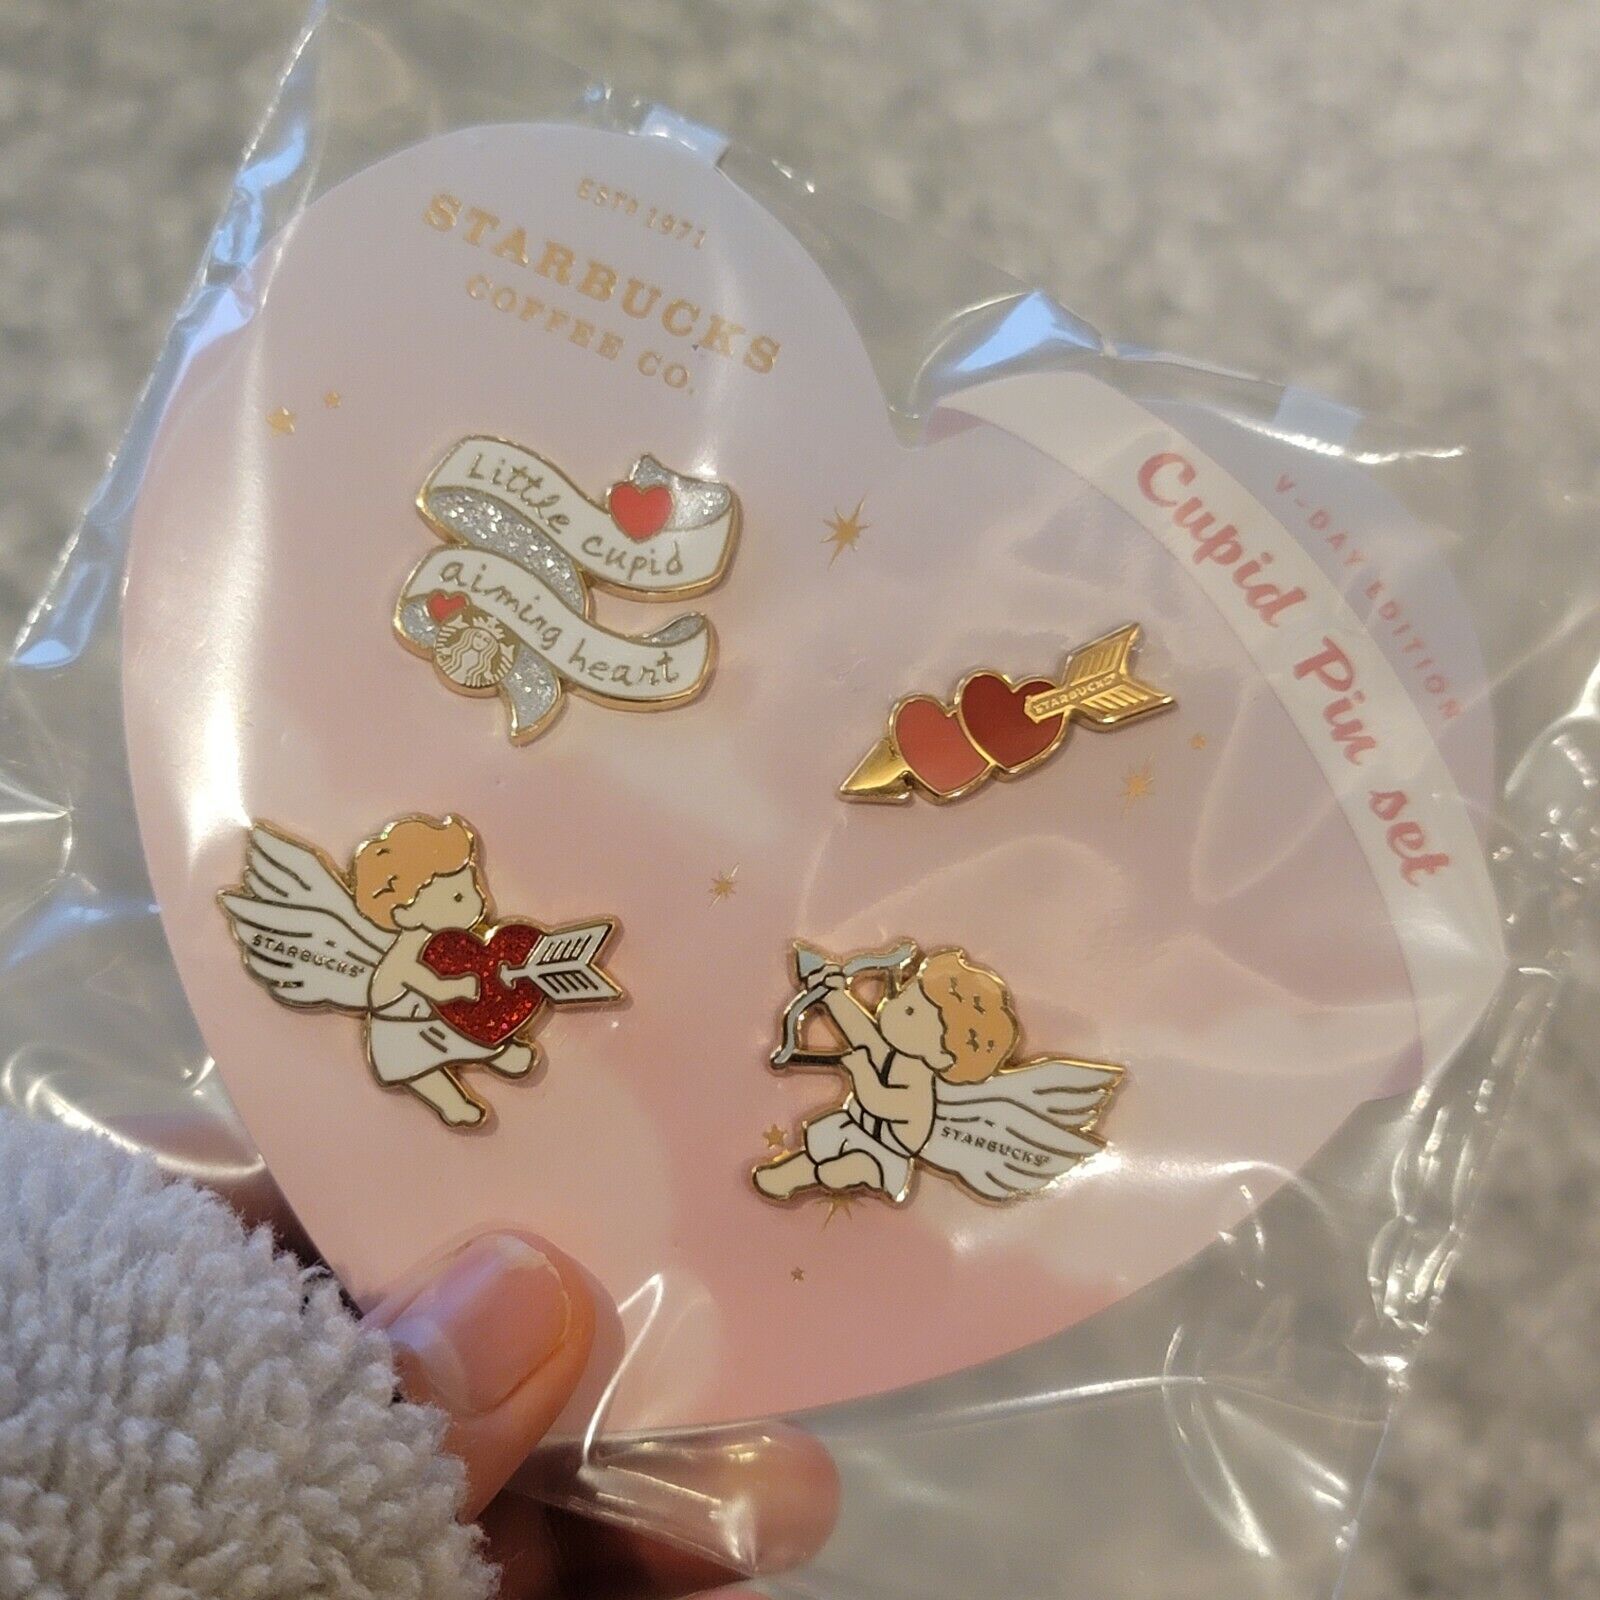 Starbucks Korea 2021 Love cupid pin set limited edition